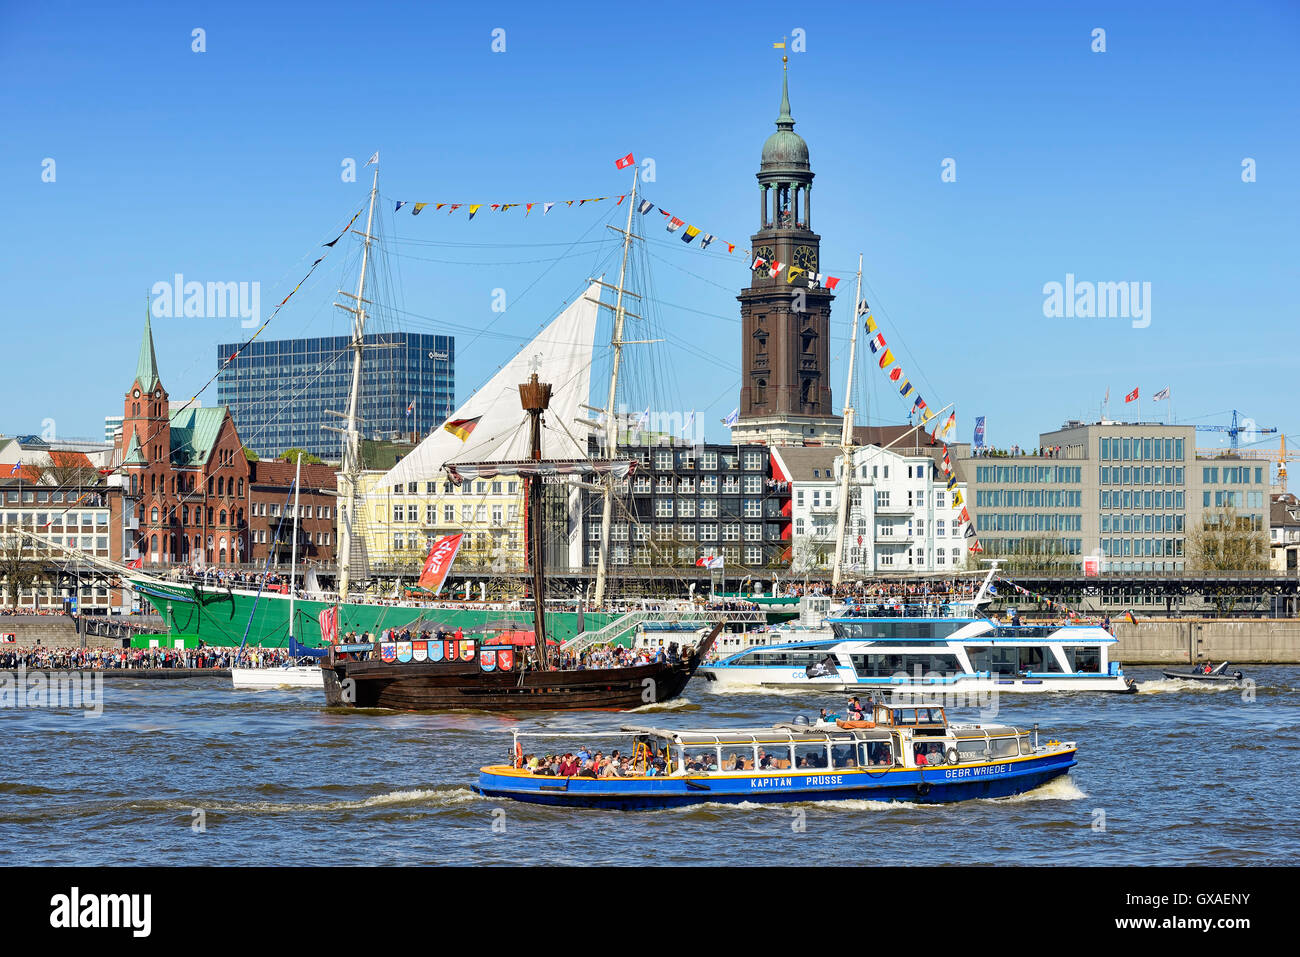 Einlaufparade zum Hamburger Hafengeburtstag 2016, Hamburg, Deutschland, Europa Stock Photo